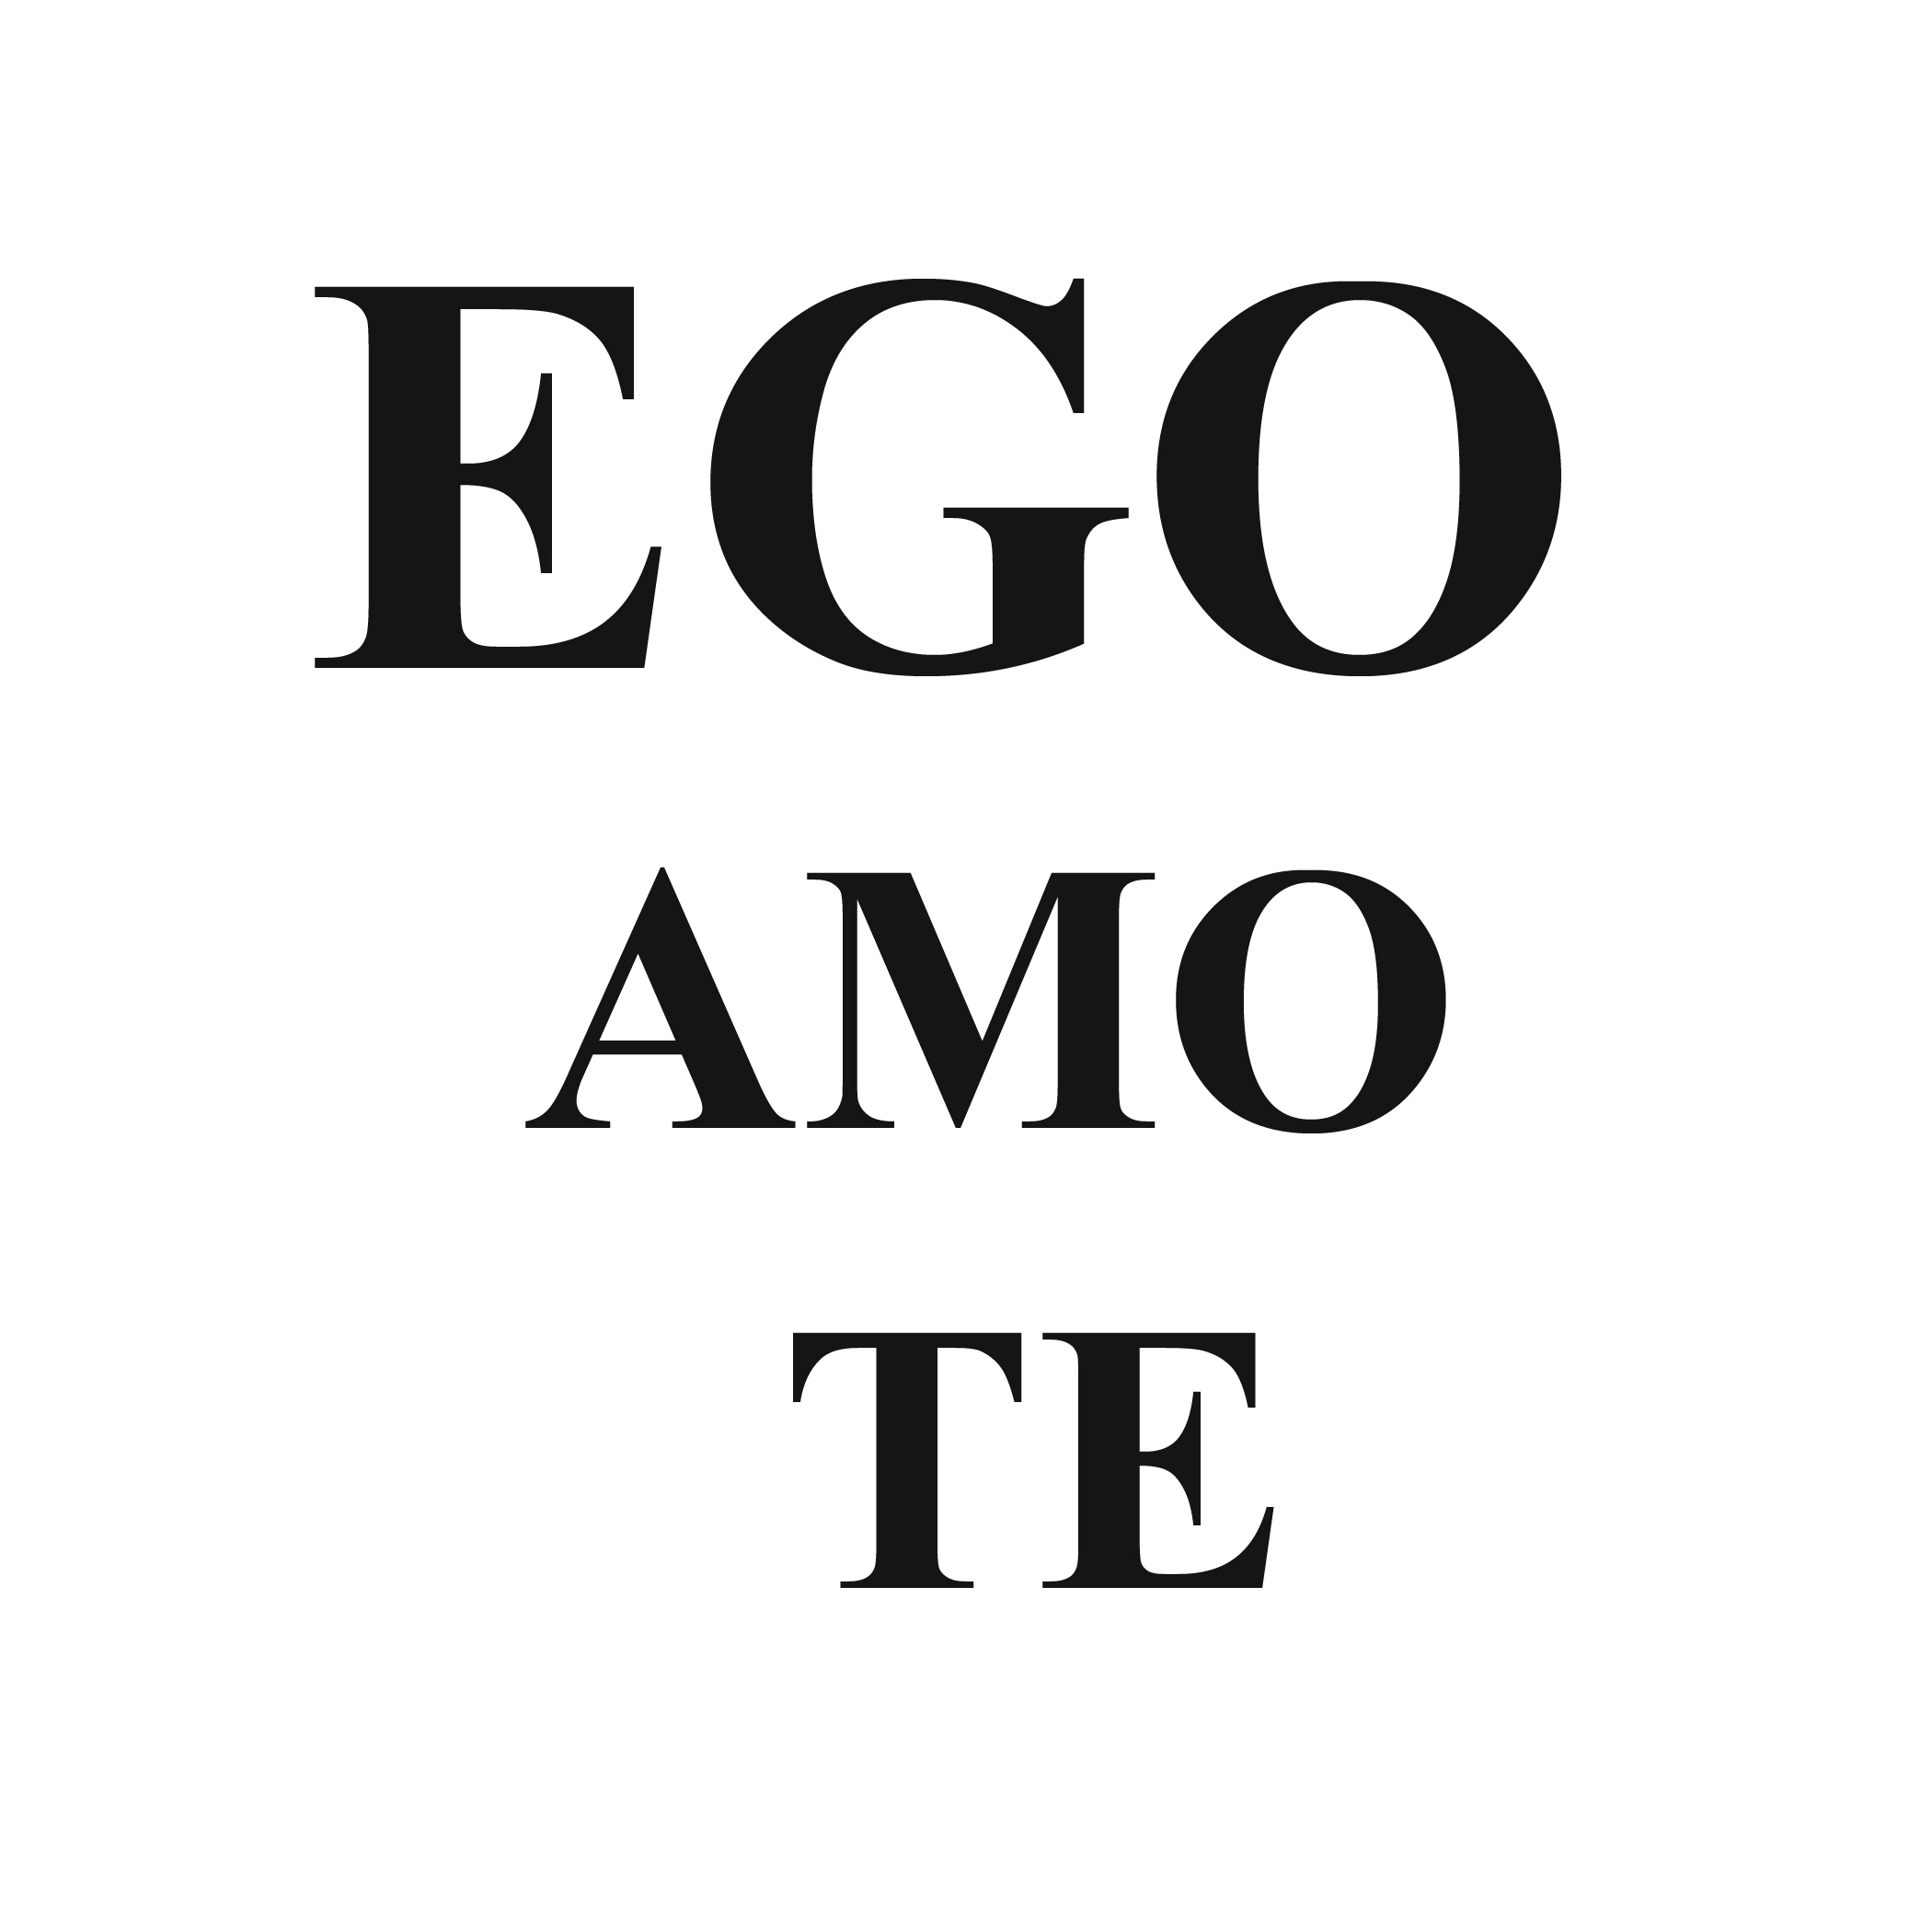 Episode image for Ego Amo Te